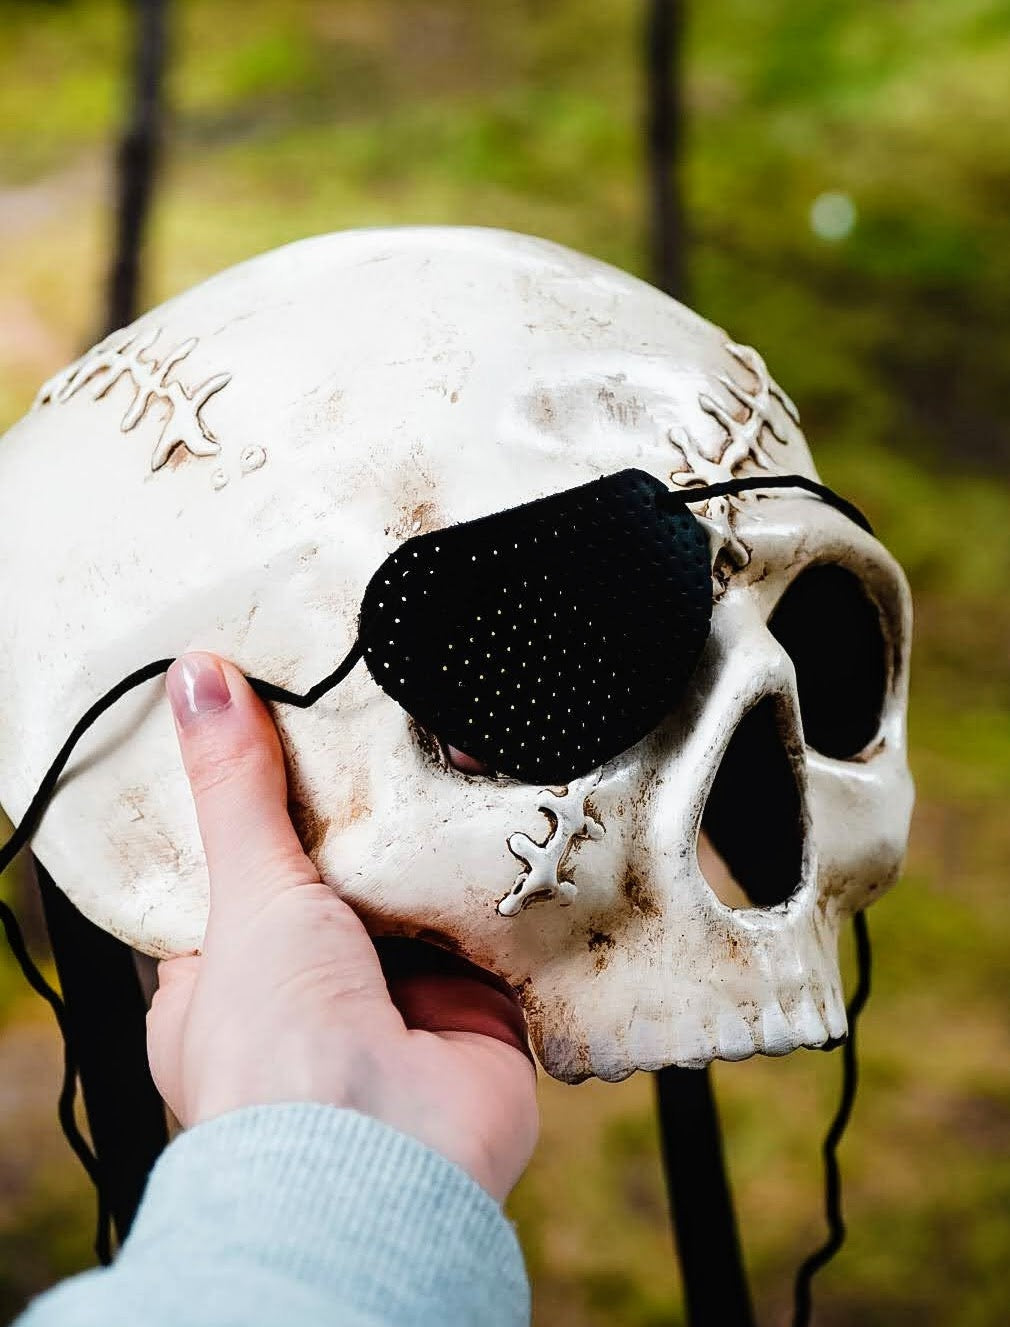 Mask ready - Pirate skull mask venetian style